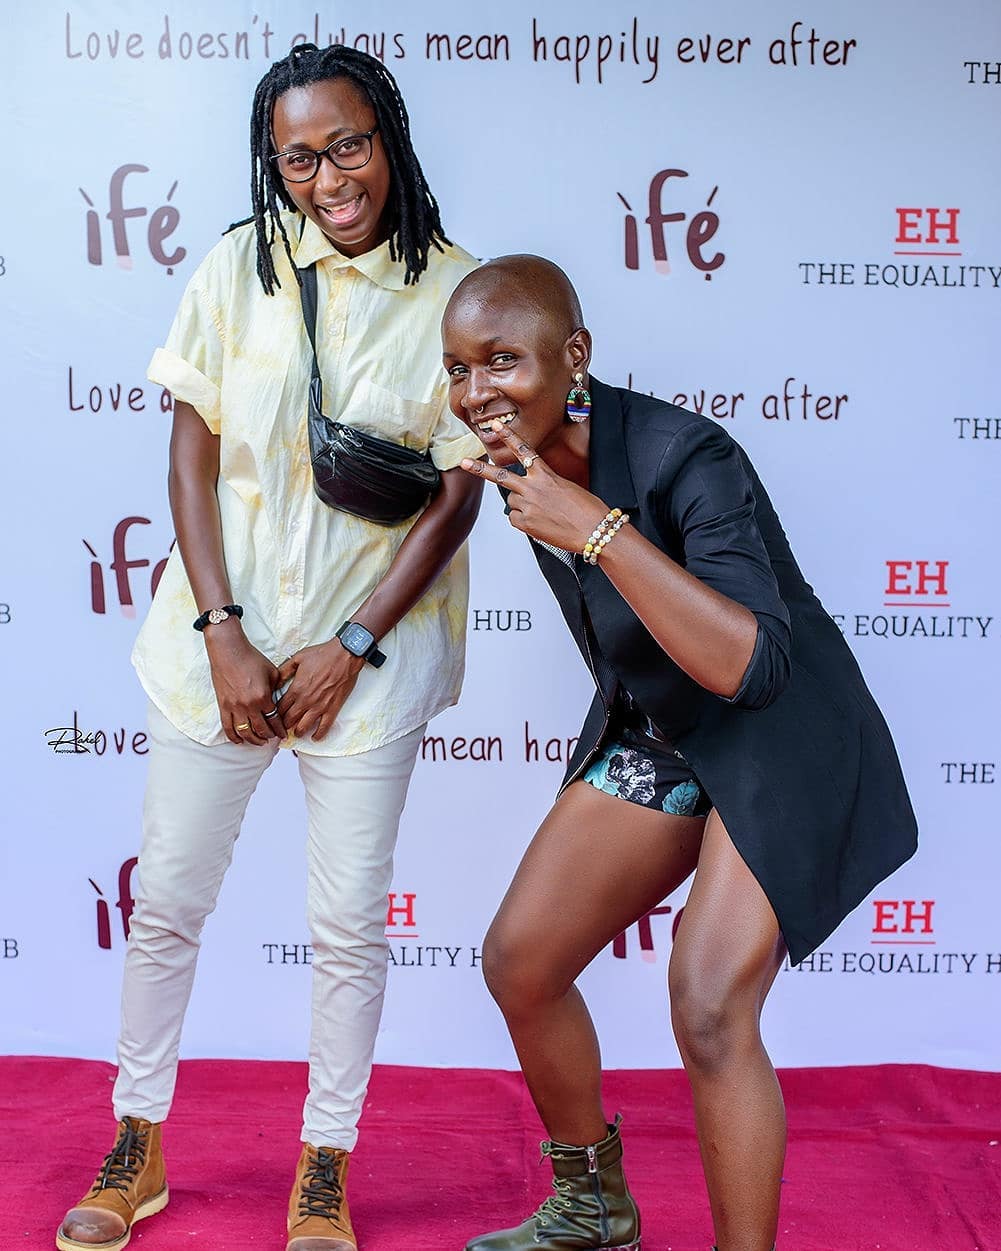 Nigerias First Lesbian Movie Ife Screened In Lagos Photos Igbere Tv